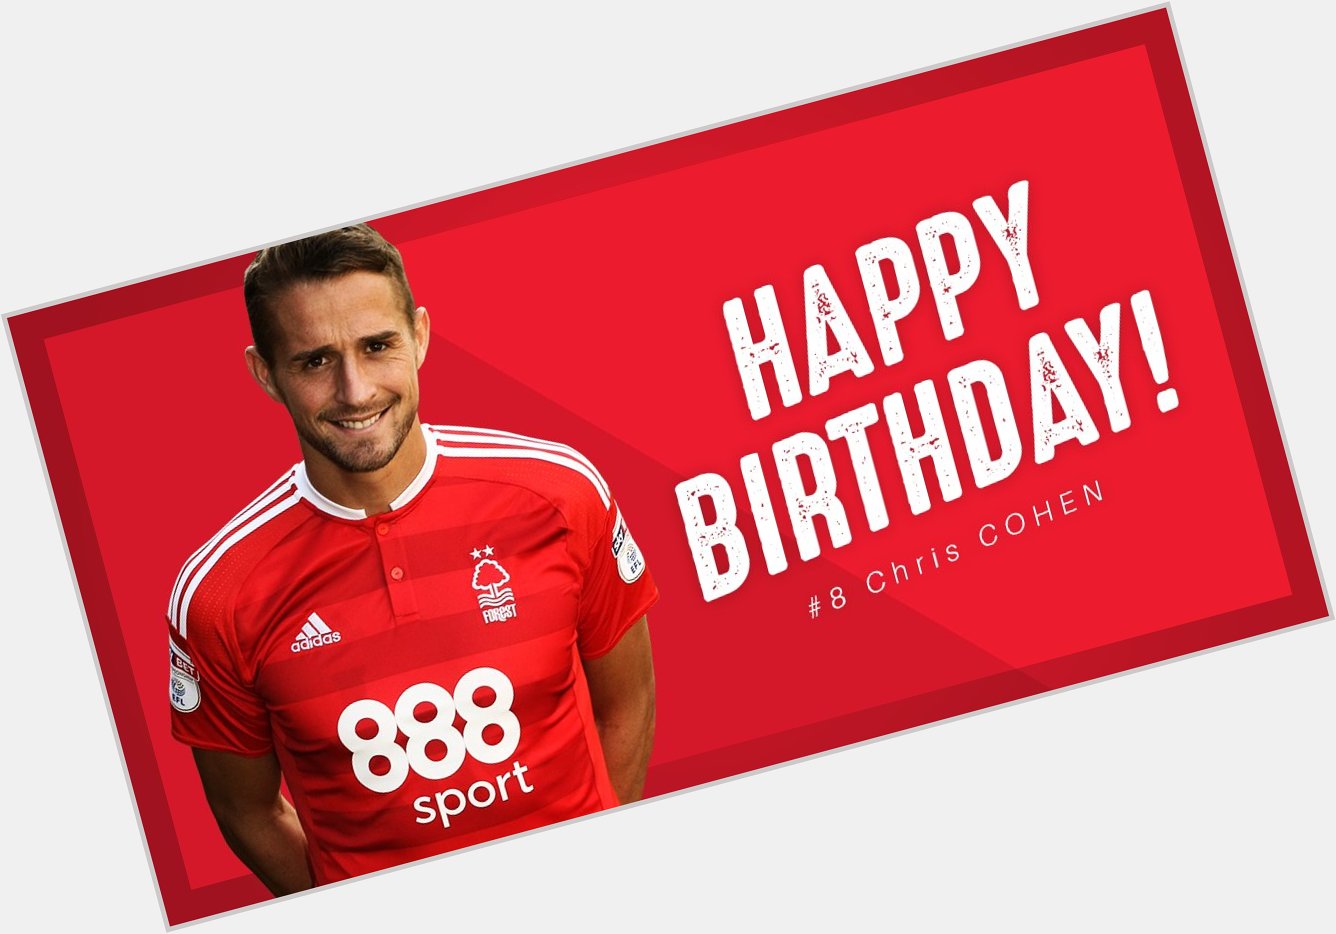  Happy 30th birthday to midfielder Chris Cohen! 